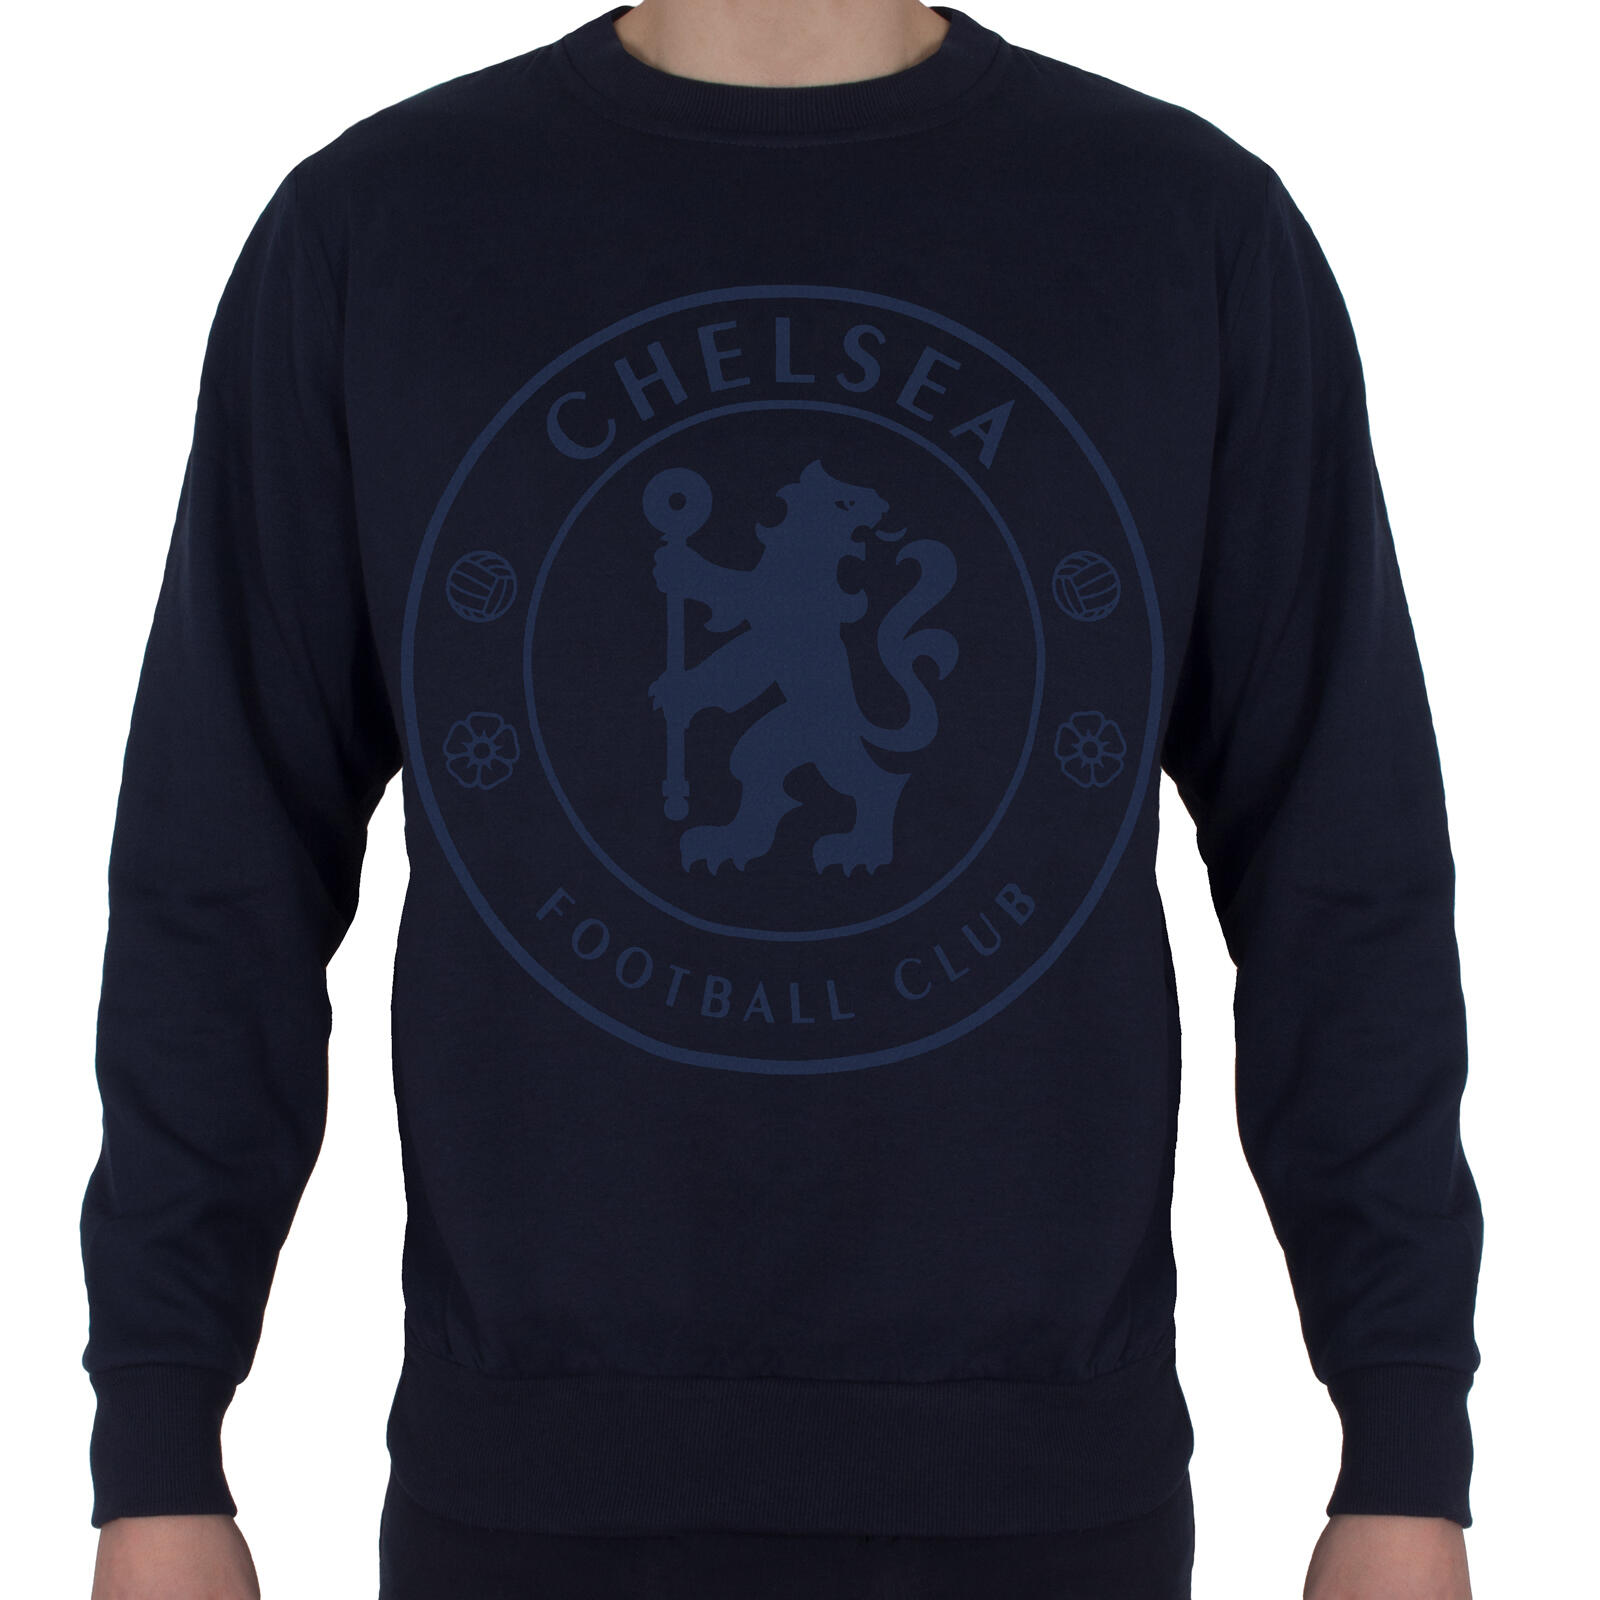 CHELSEA Chelsea FC Boys Sweatshirt Graphic Top Kids OFFICIAL Football Gift